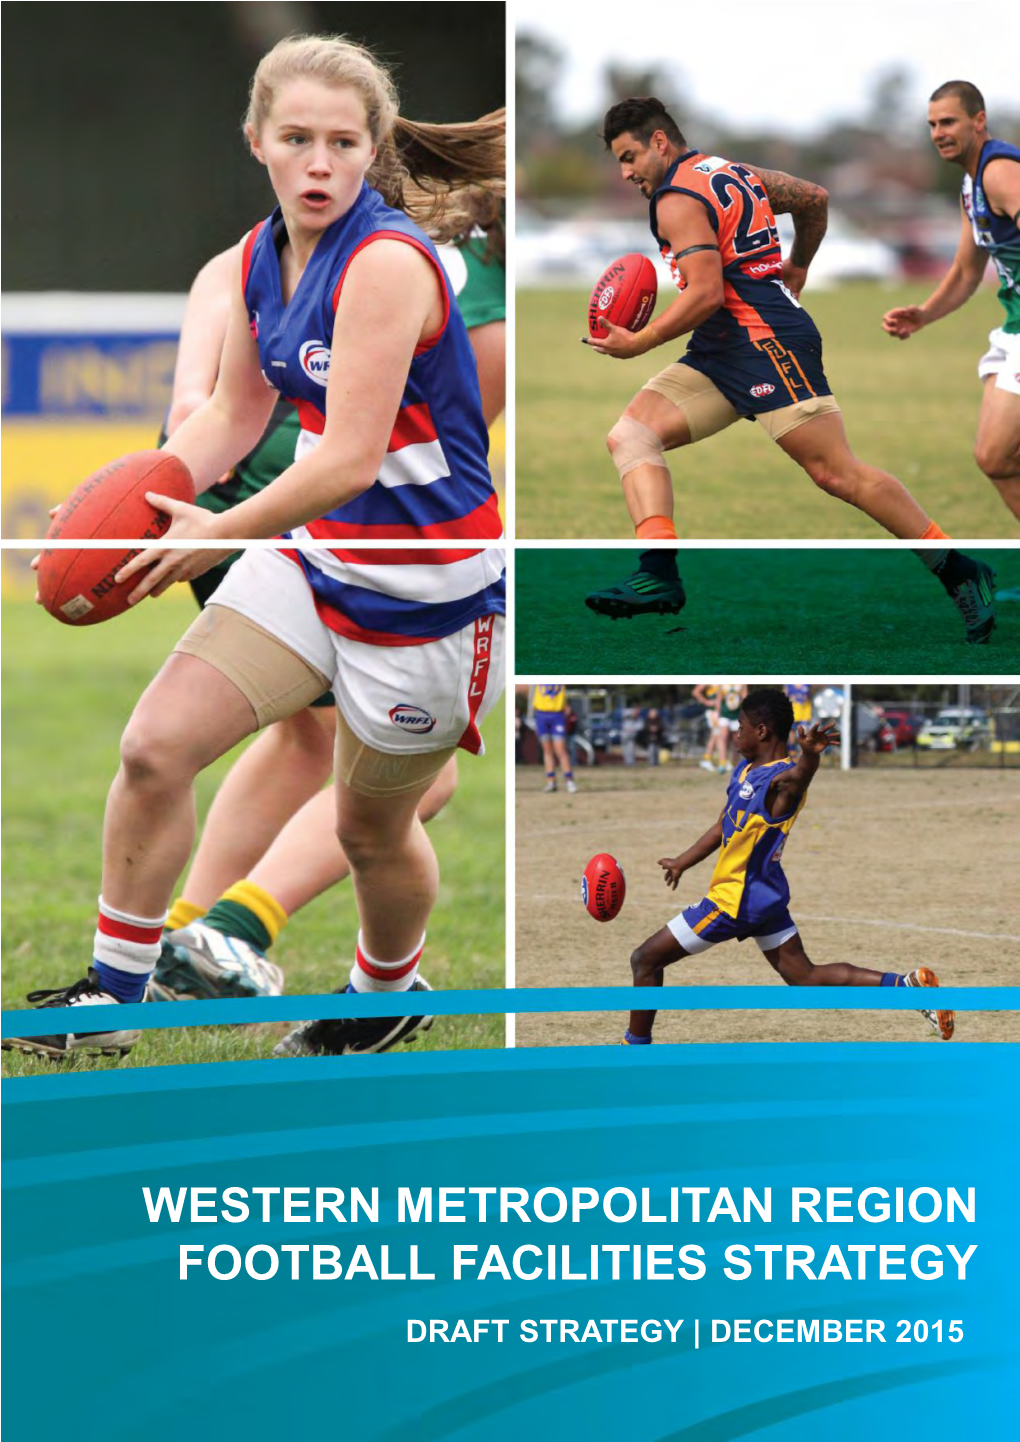 Western Metropolitan Region Football Facilities Strategy Draft Strategy | December 2015